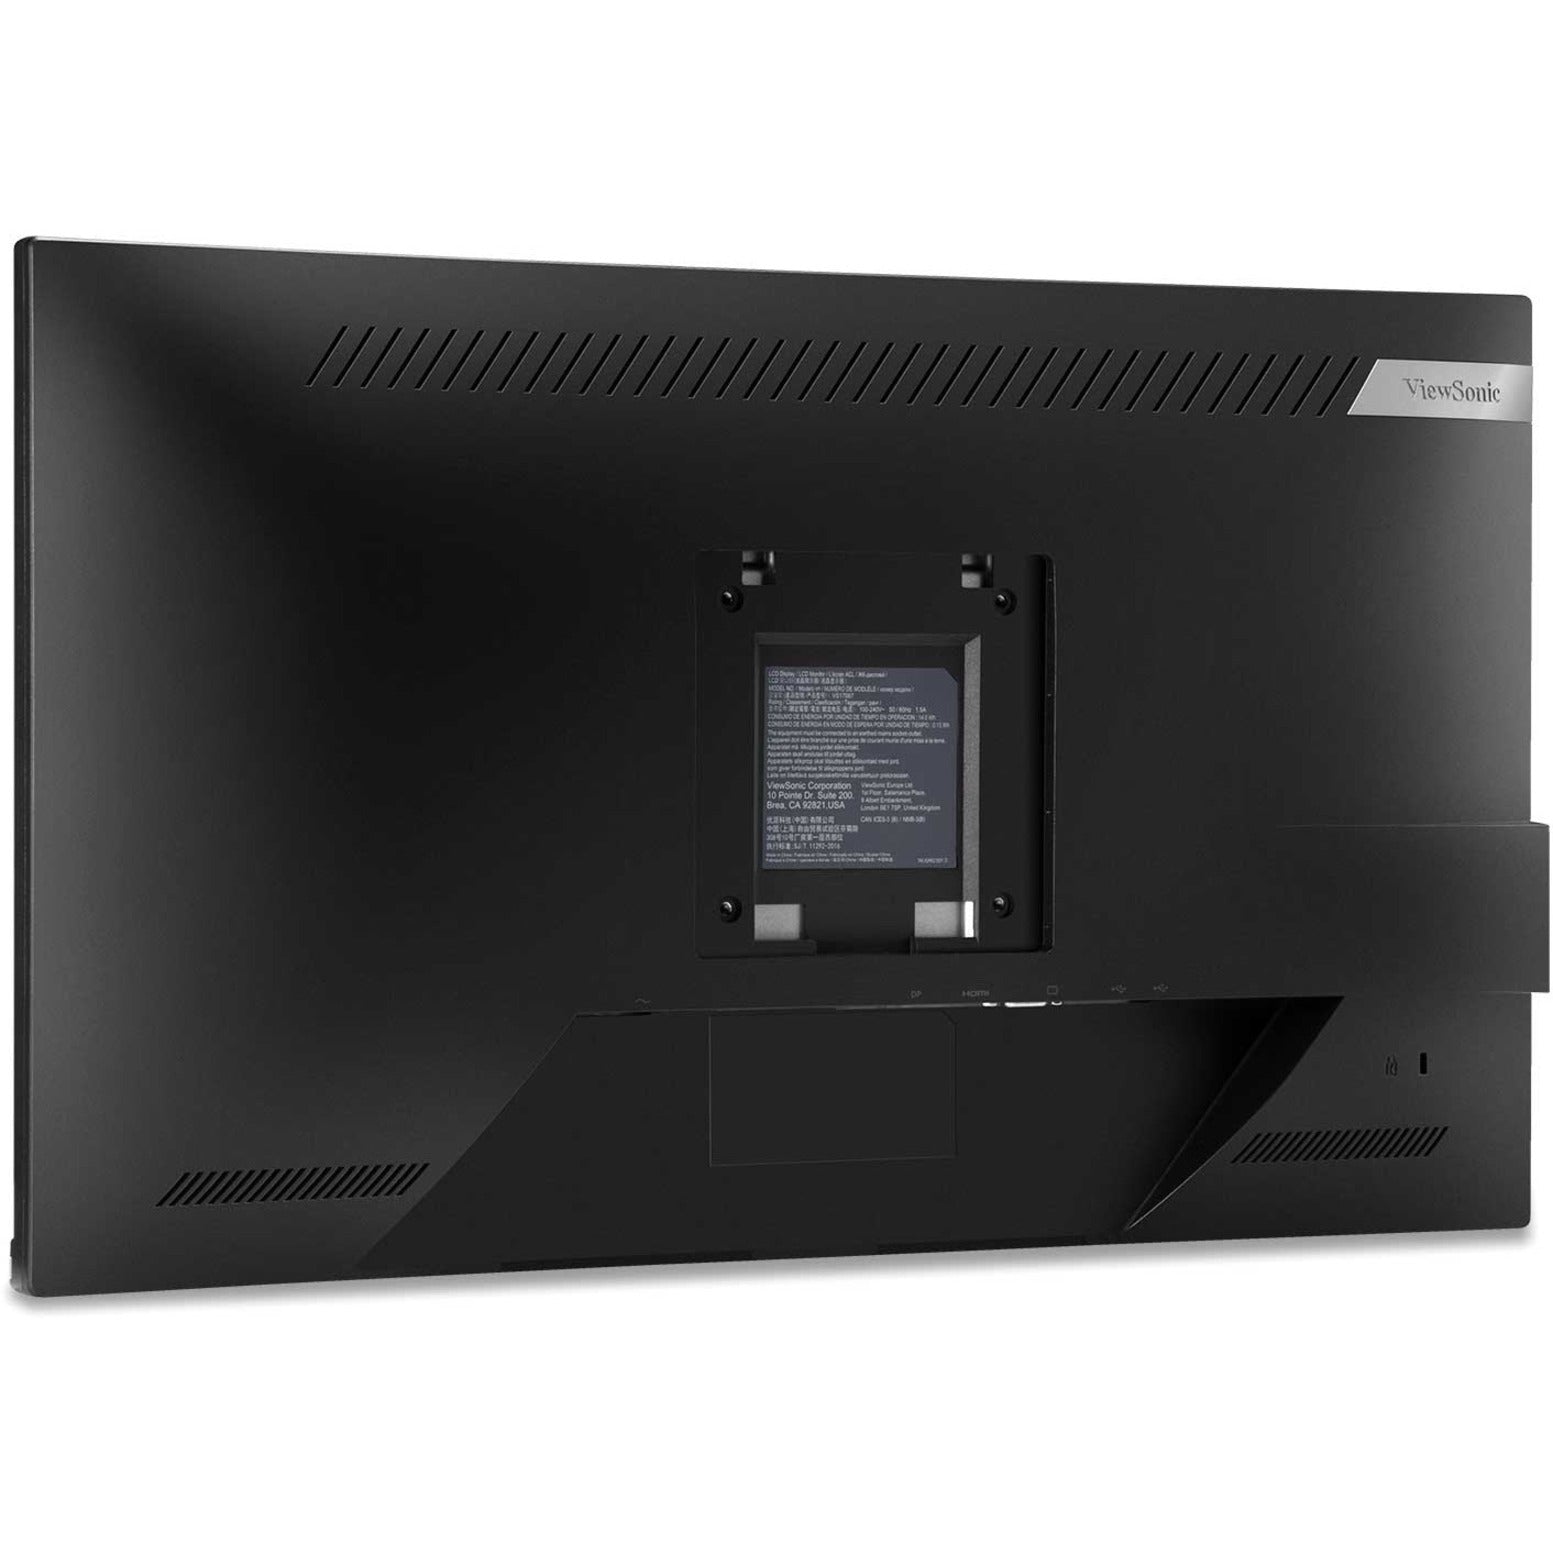 ViewSonic VG2448_H2 24" Dual Monitors with Full HD IPS Panel, USB Hub, 1920x1080 Resolution